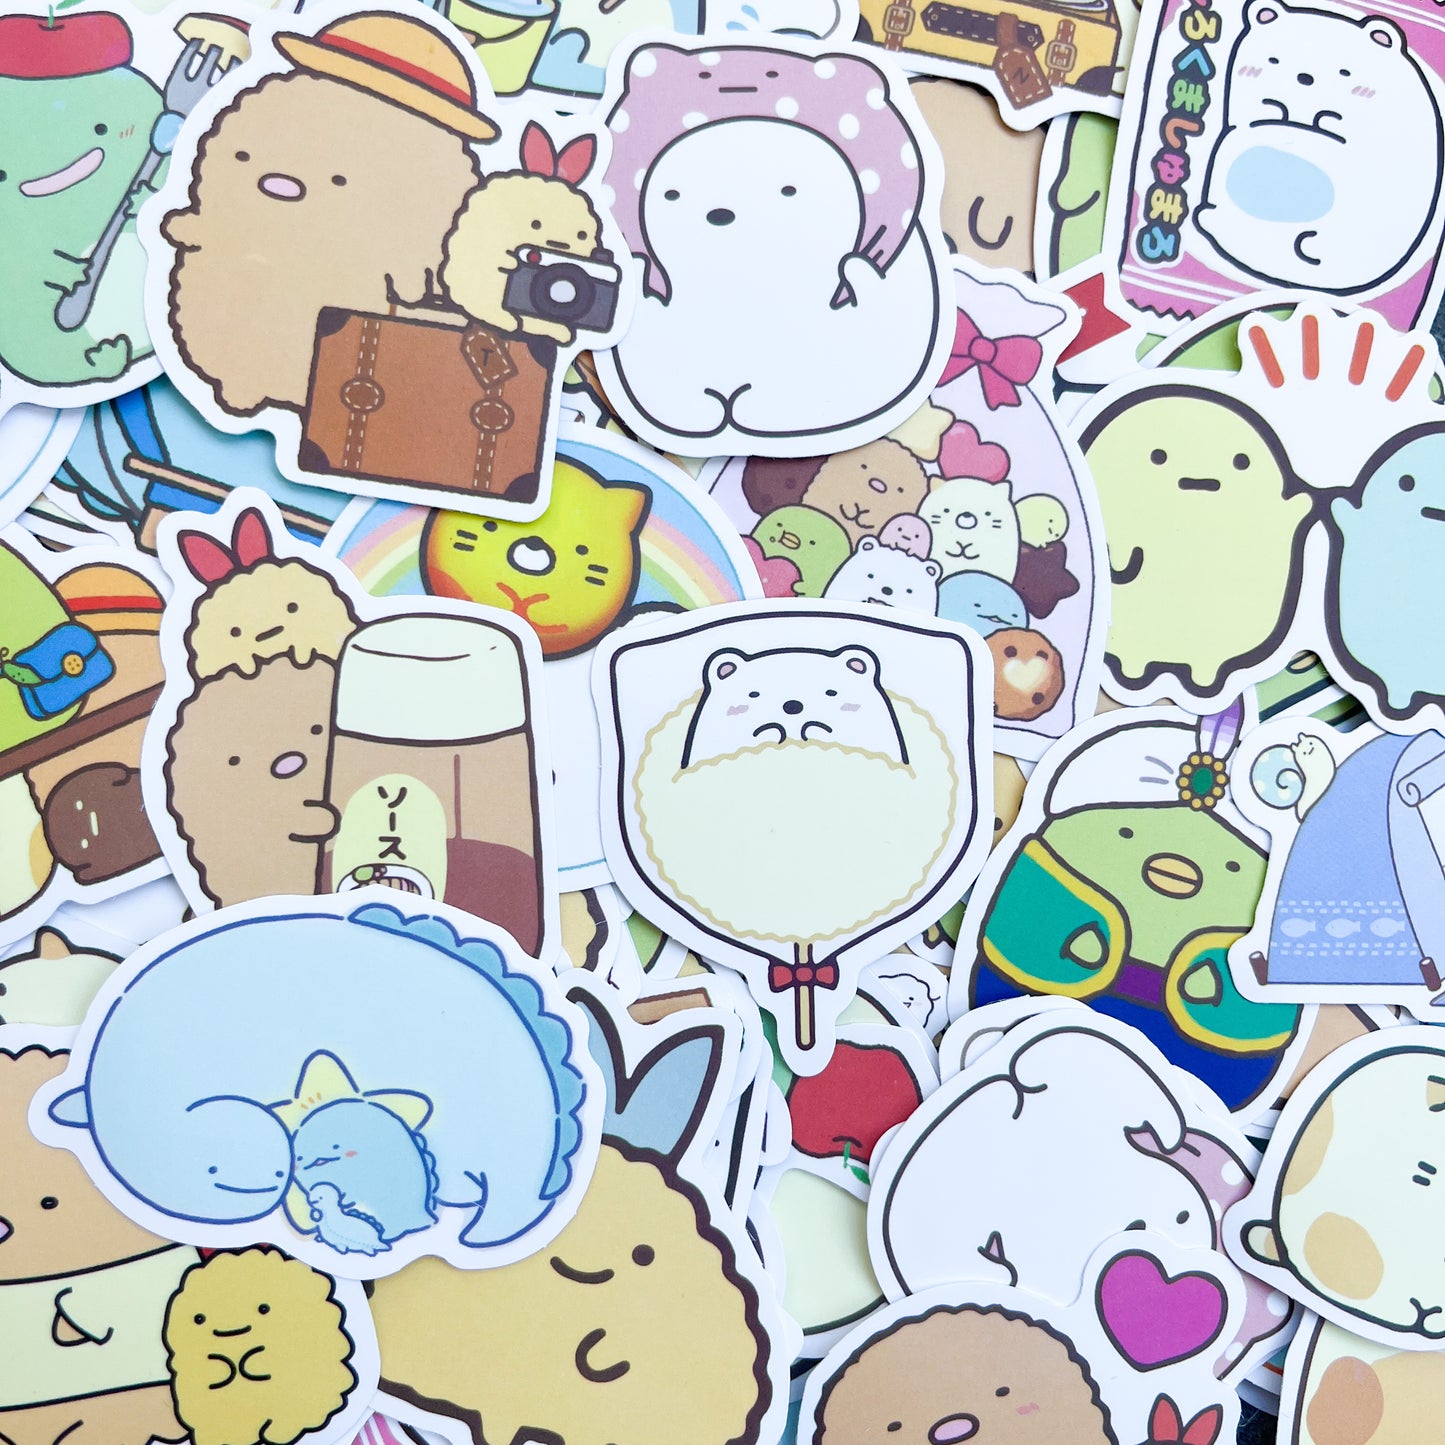 Sumikko Gurashi Stickers - 5 Random – Cyndercake